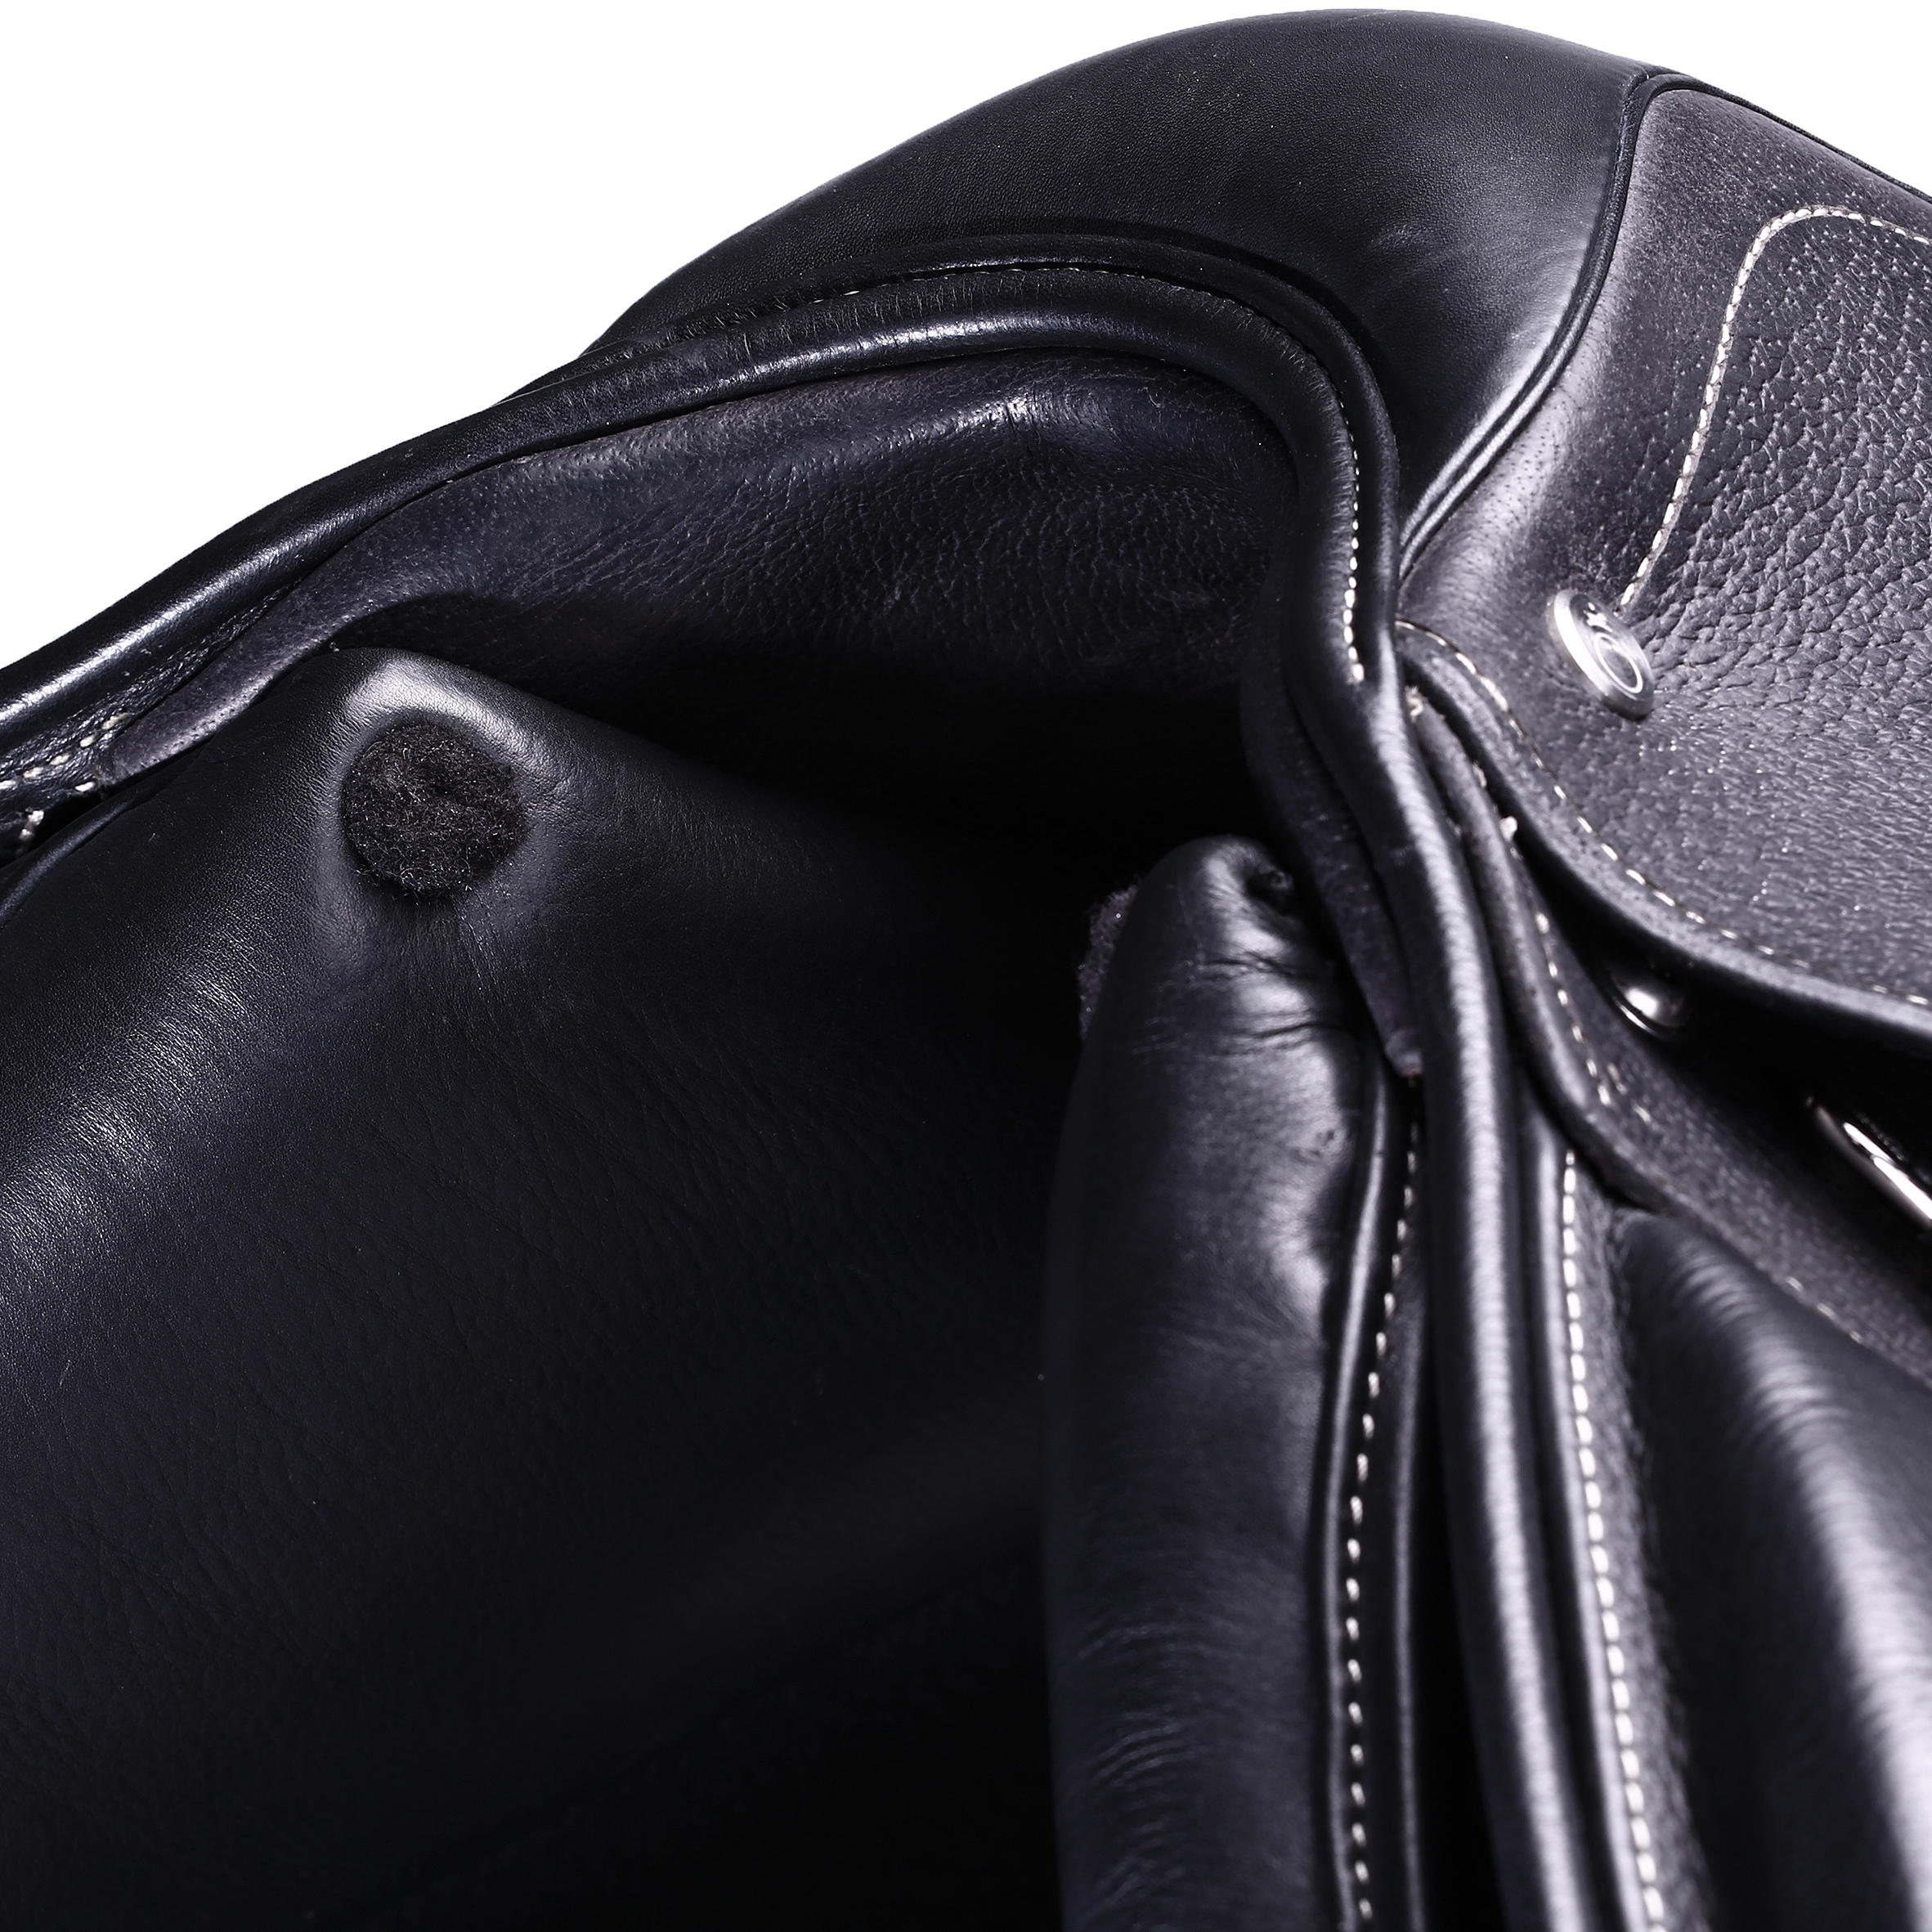 17.5" Versatile Leather Horse Riding Saddle for Horse Paddock - Black 8/16